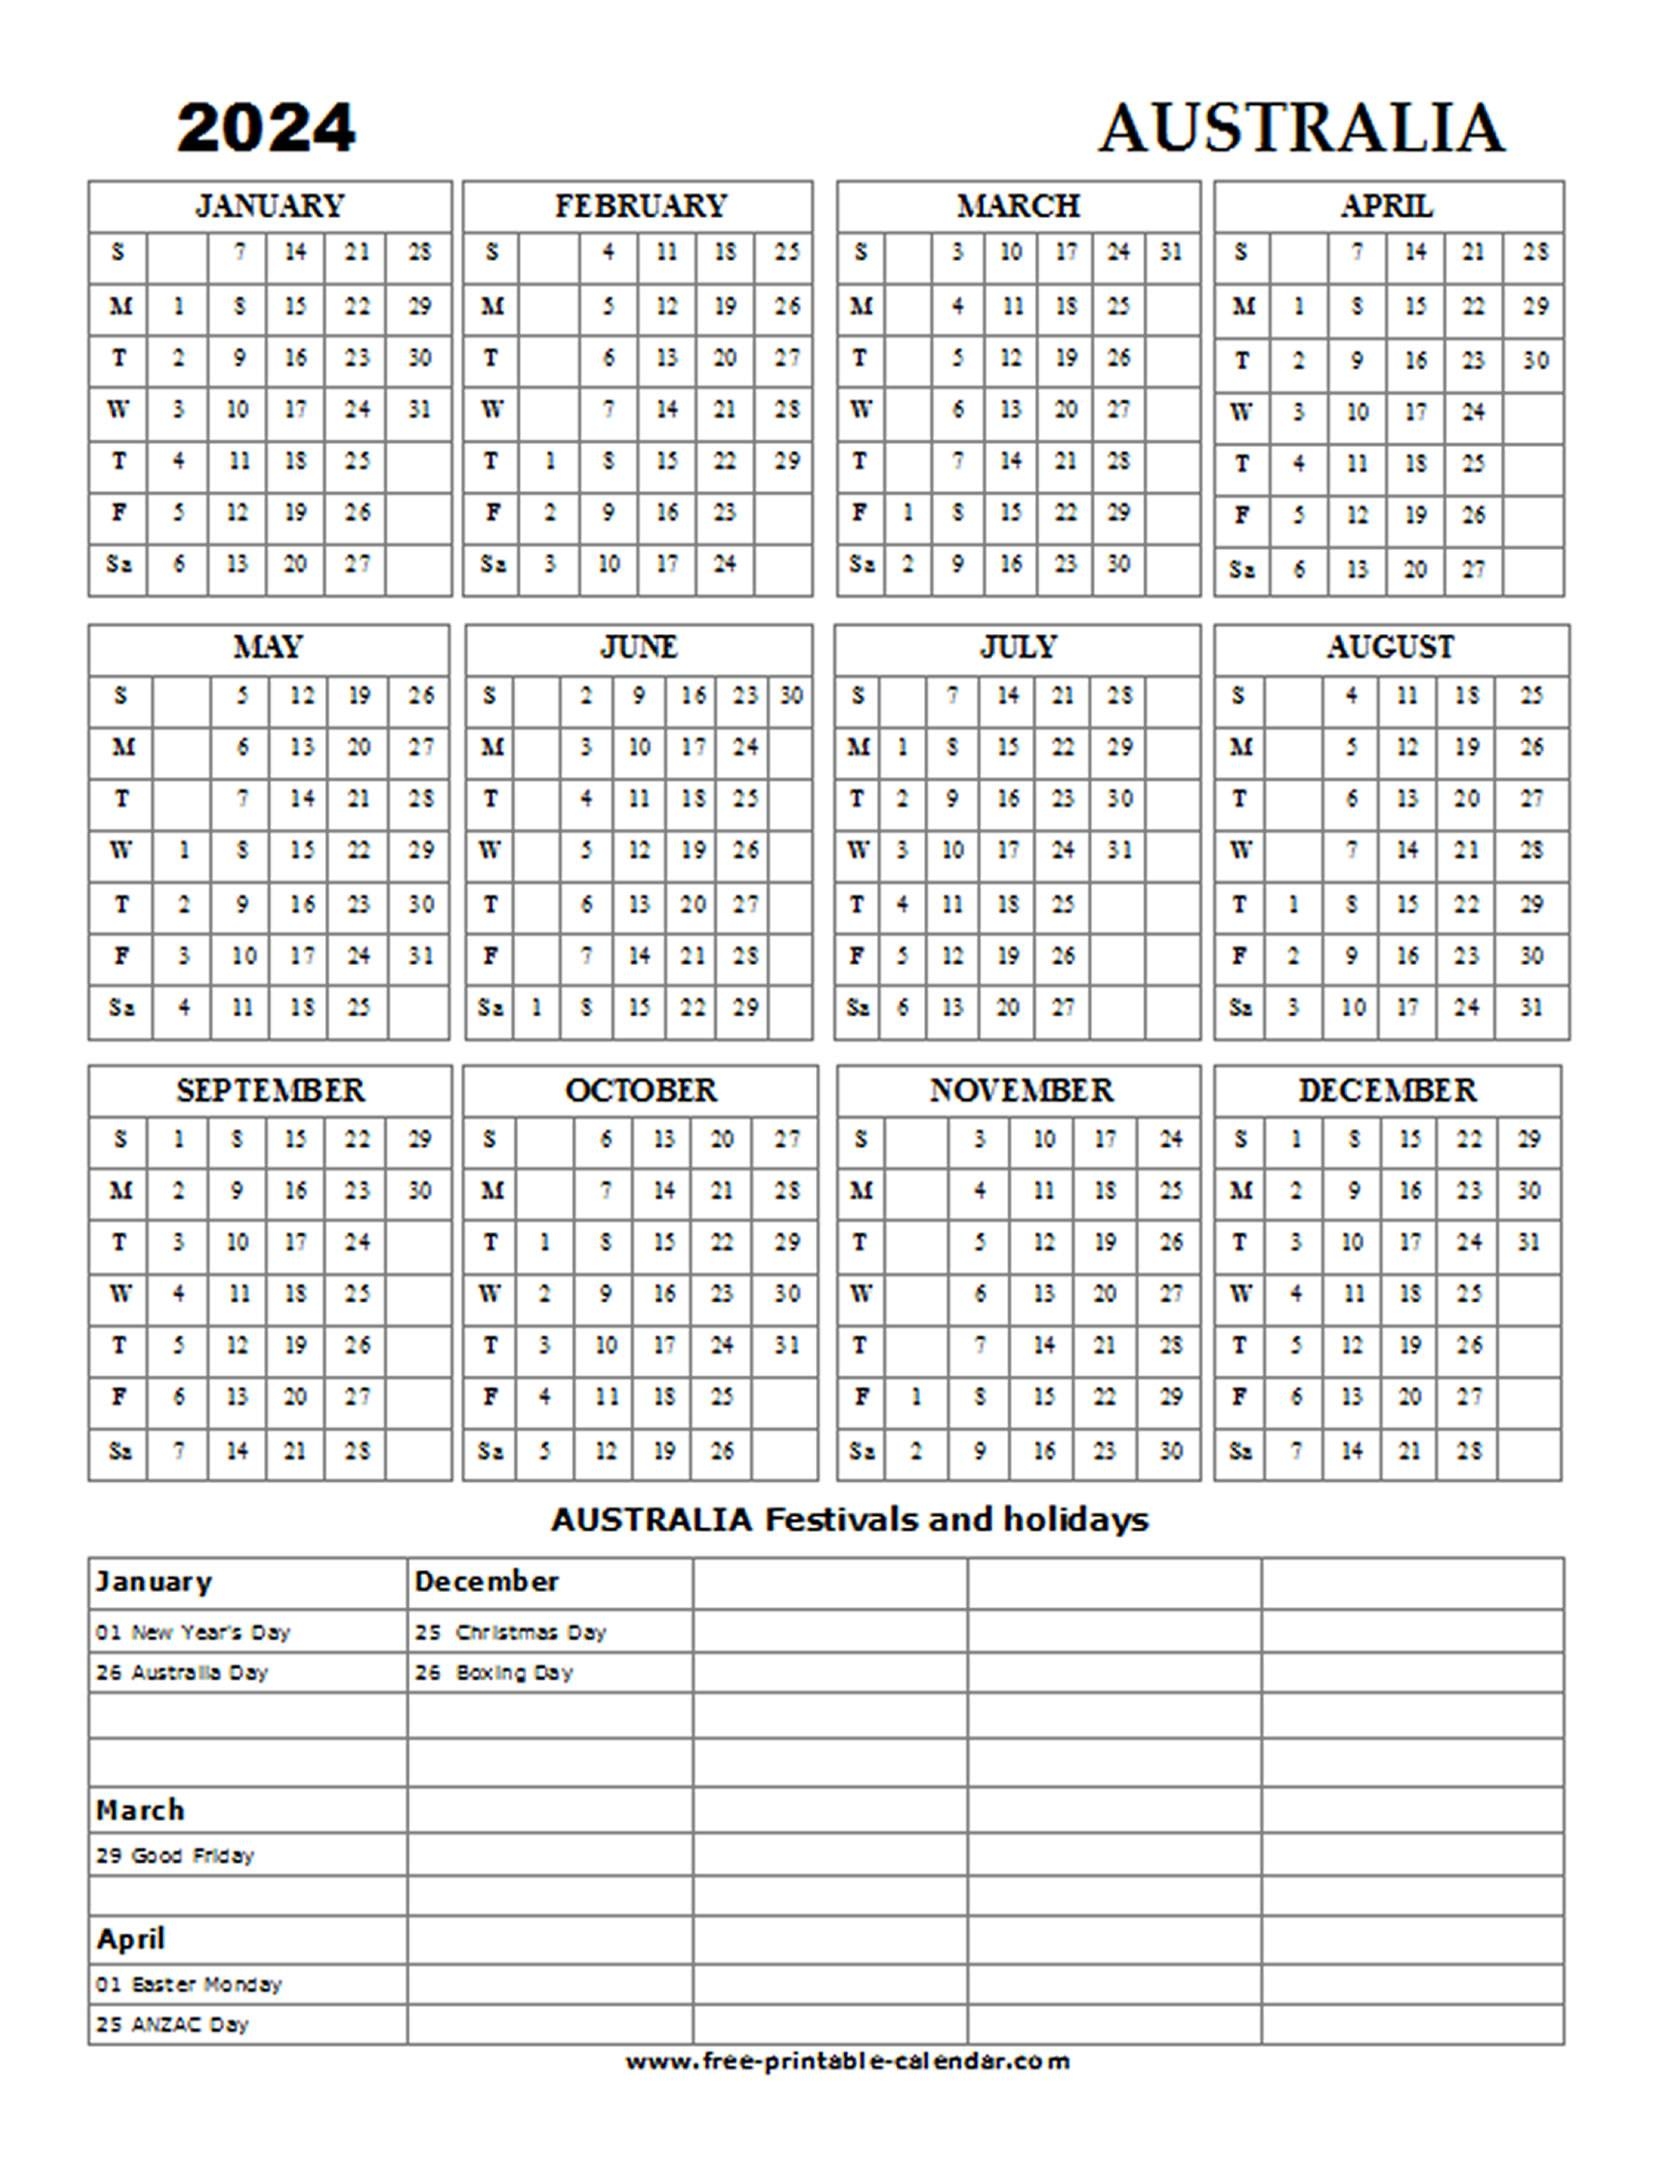 2024 Australia Holiday Calendar - Free-Printable-Calendar for Free Printable Calendar 2024 Australia